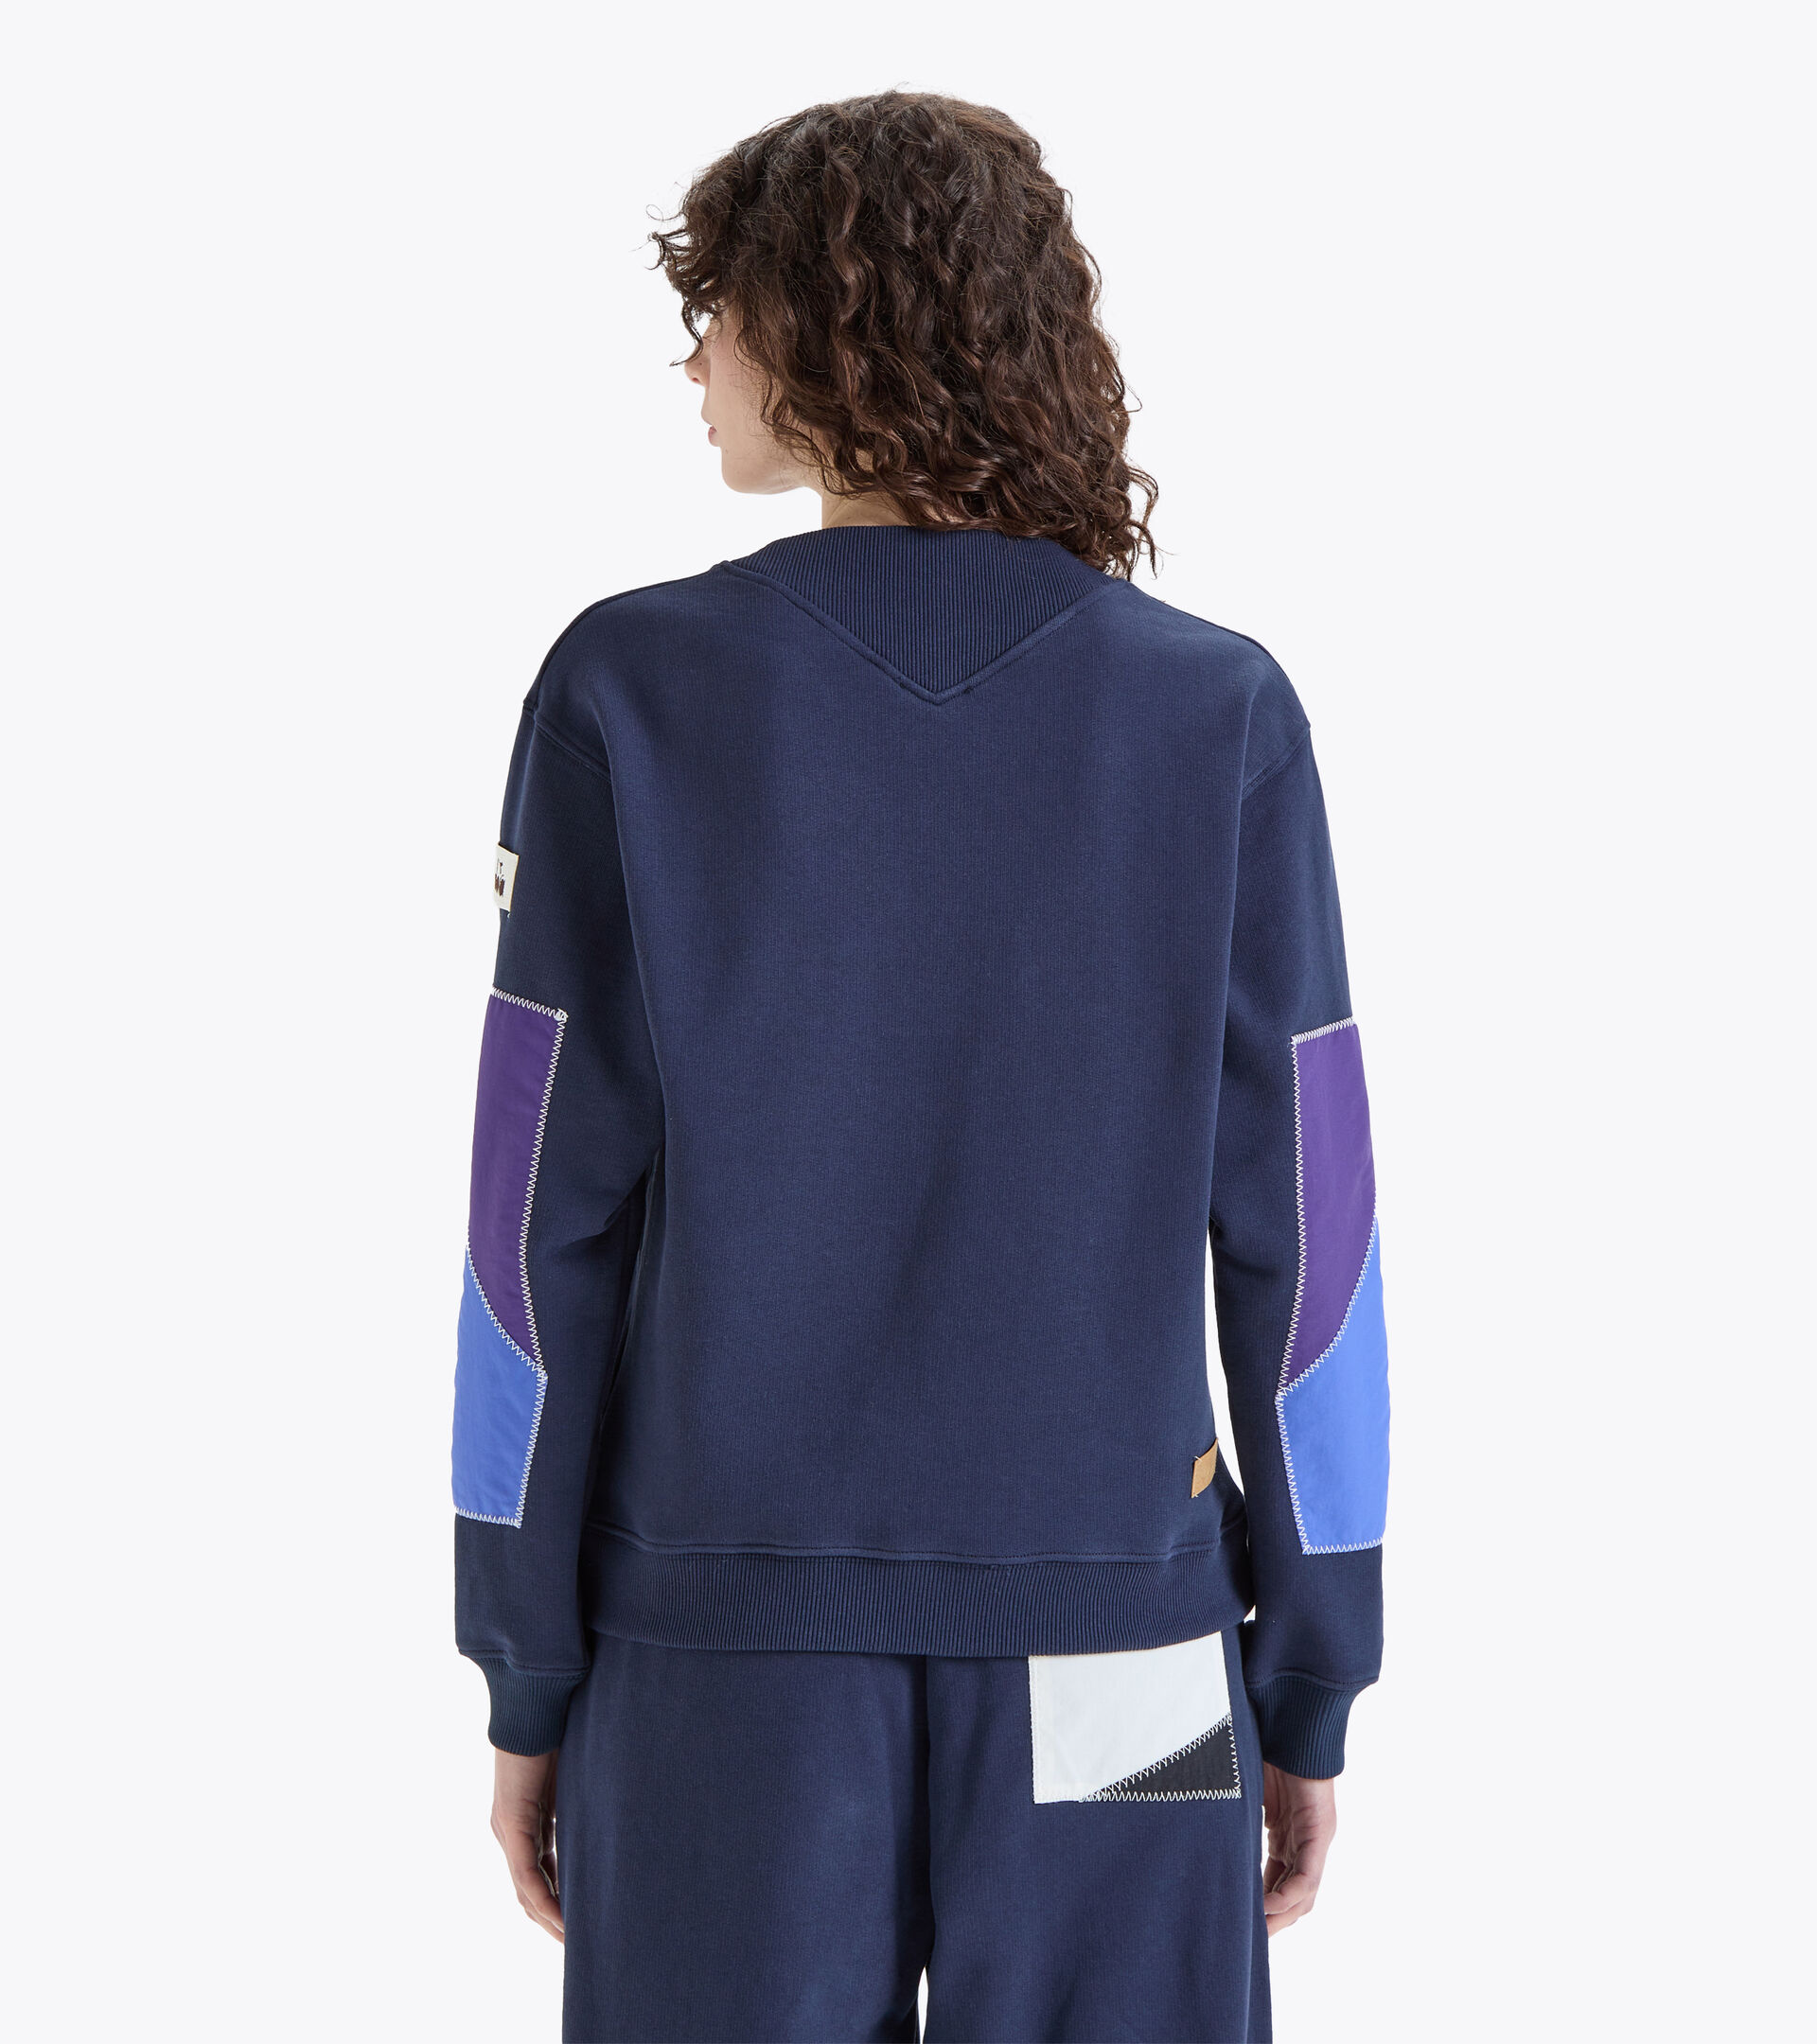 Made in Italy sweatshirt 2030 - Women  L. SWEATSHIRT CREW 2030 BLUE CORSAIR - Diadora